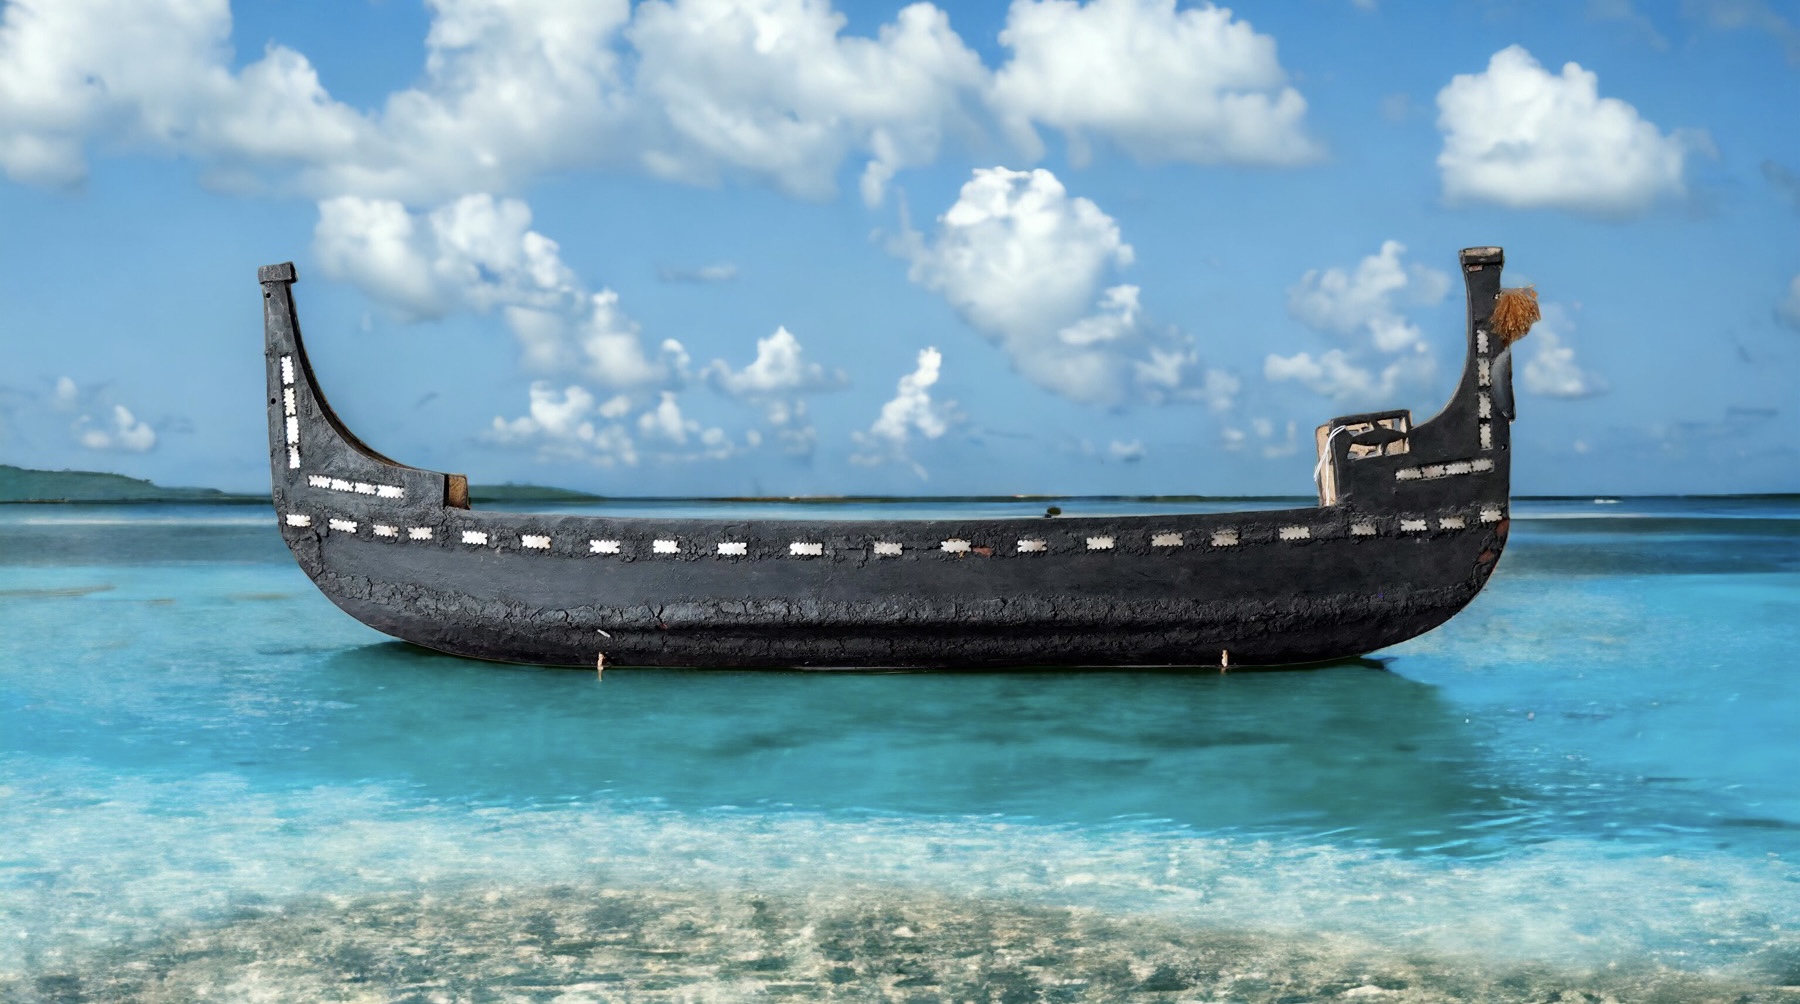 Solomon Islands Tamoko War Canoe model 